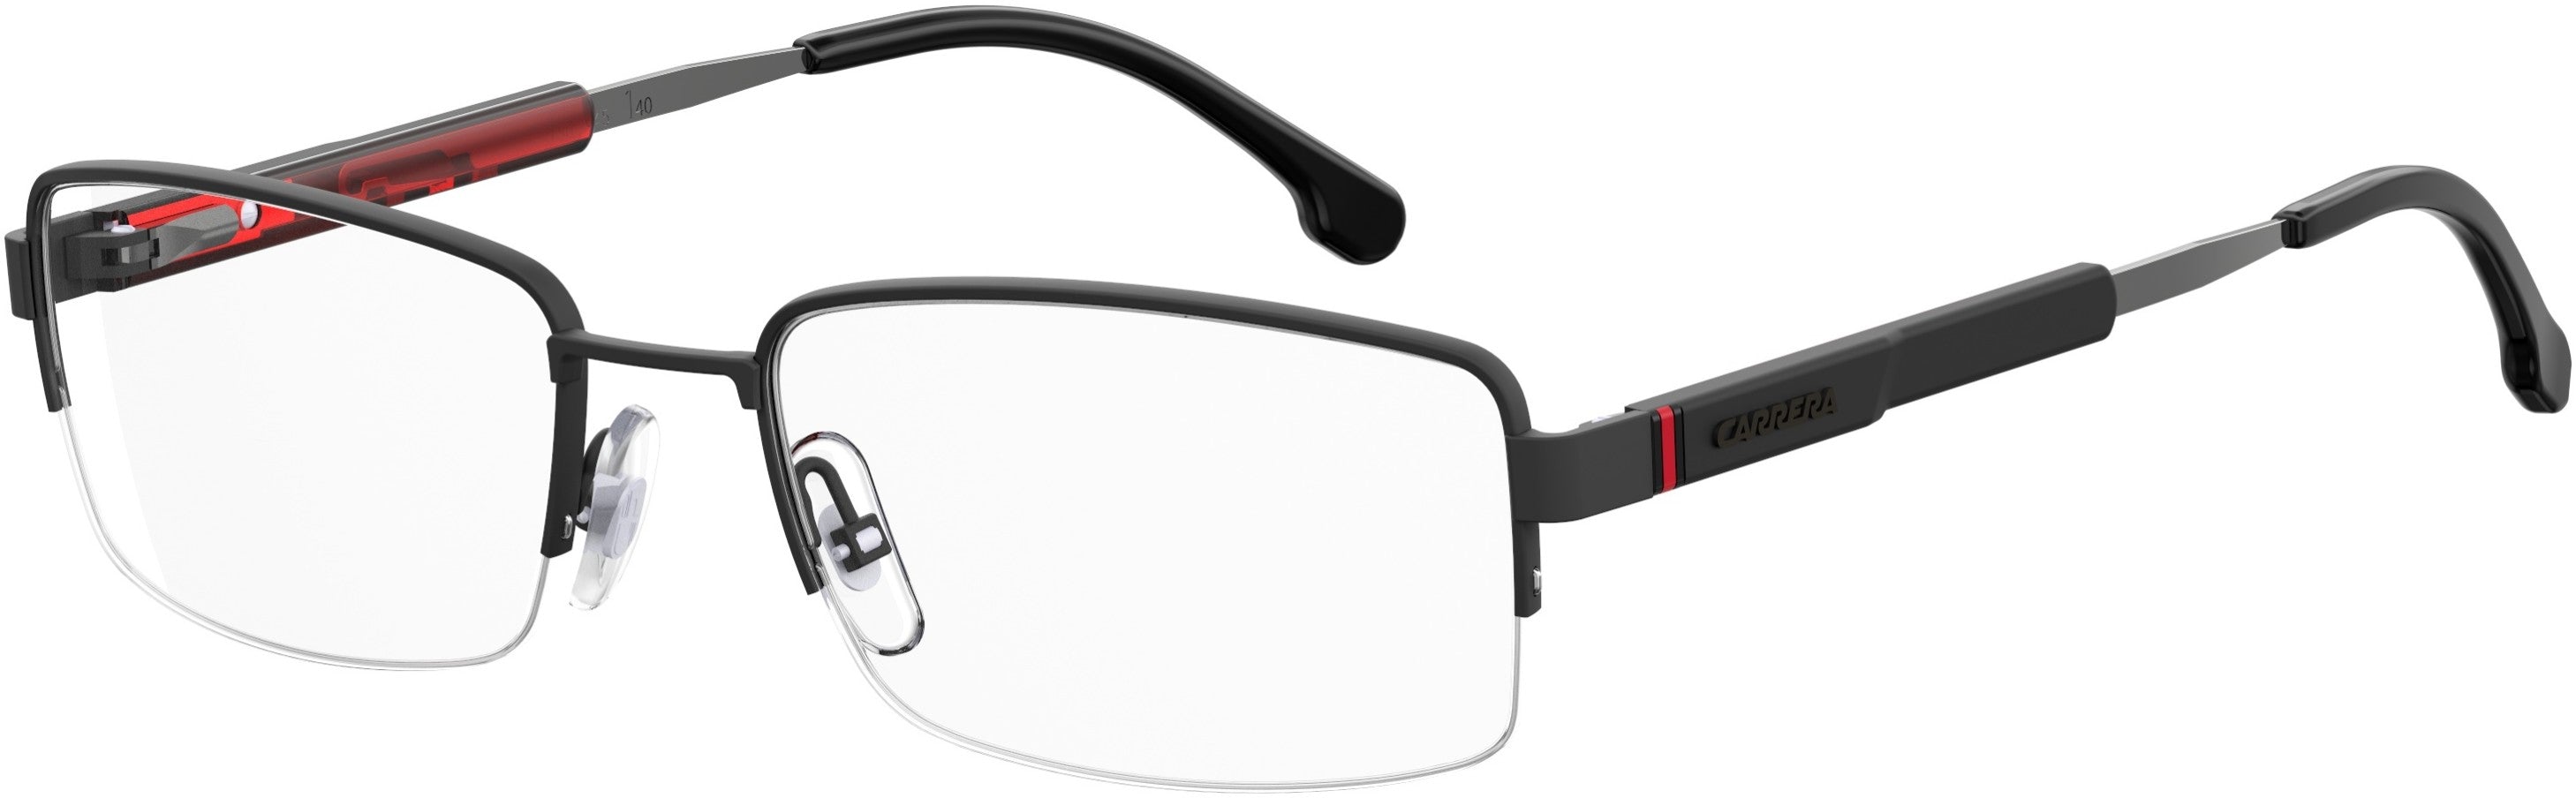  Carrera 8836 Rectangular Eyeglasses 0003-0003  Matte Black (00 Demo Lens)